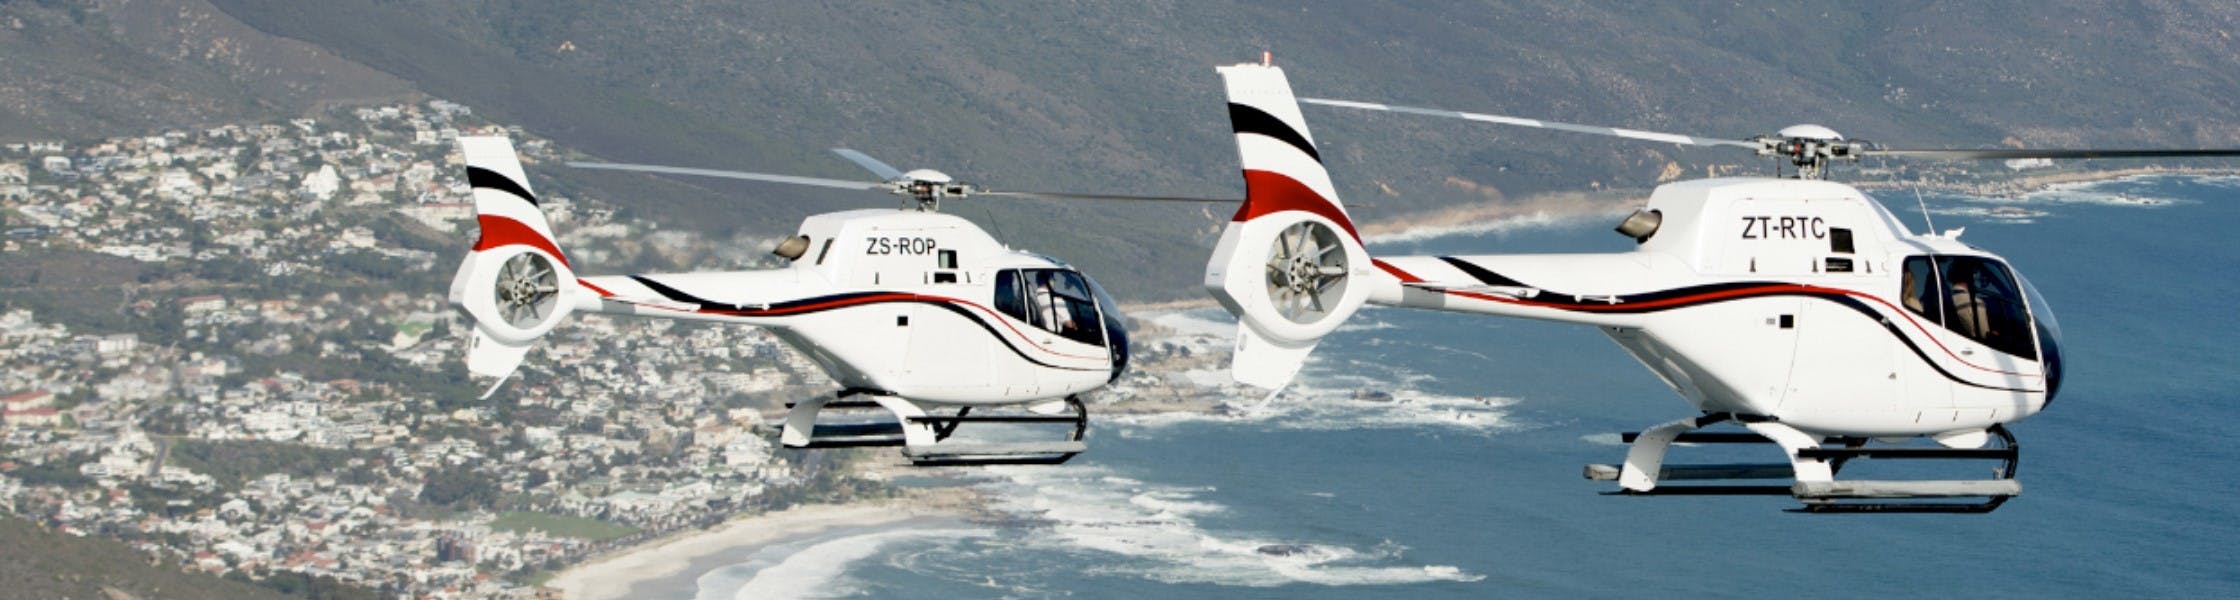 Cape Town Twelve Apostles 16-minütiger Rundflug mit dem Helikopter